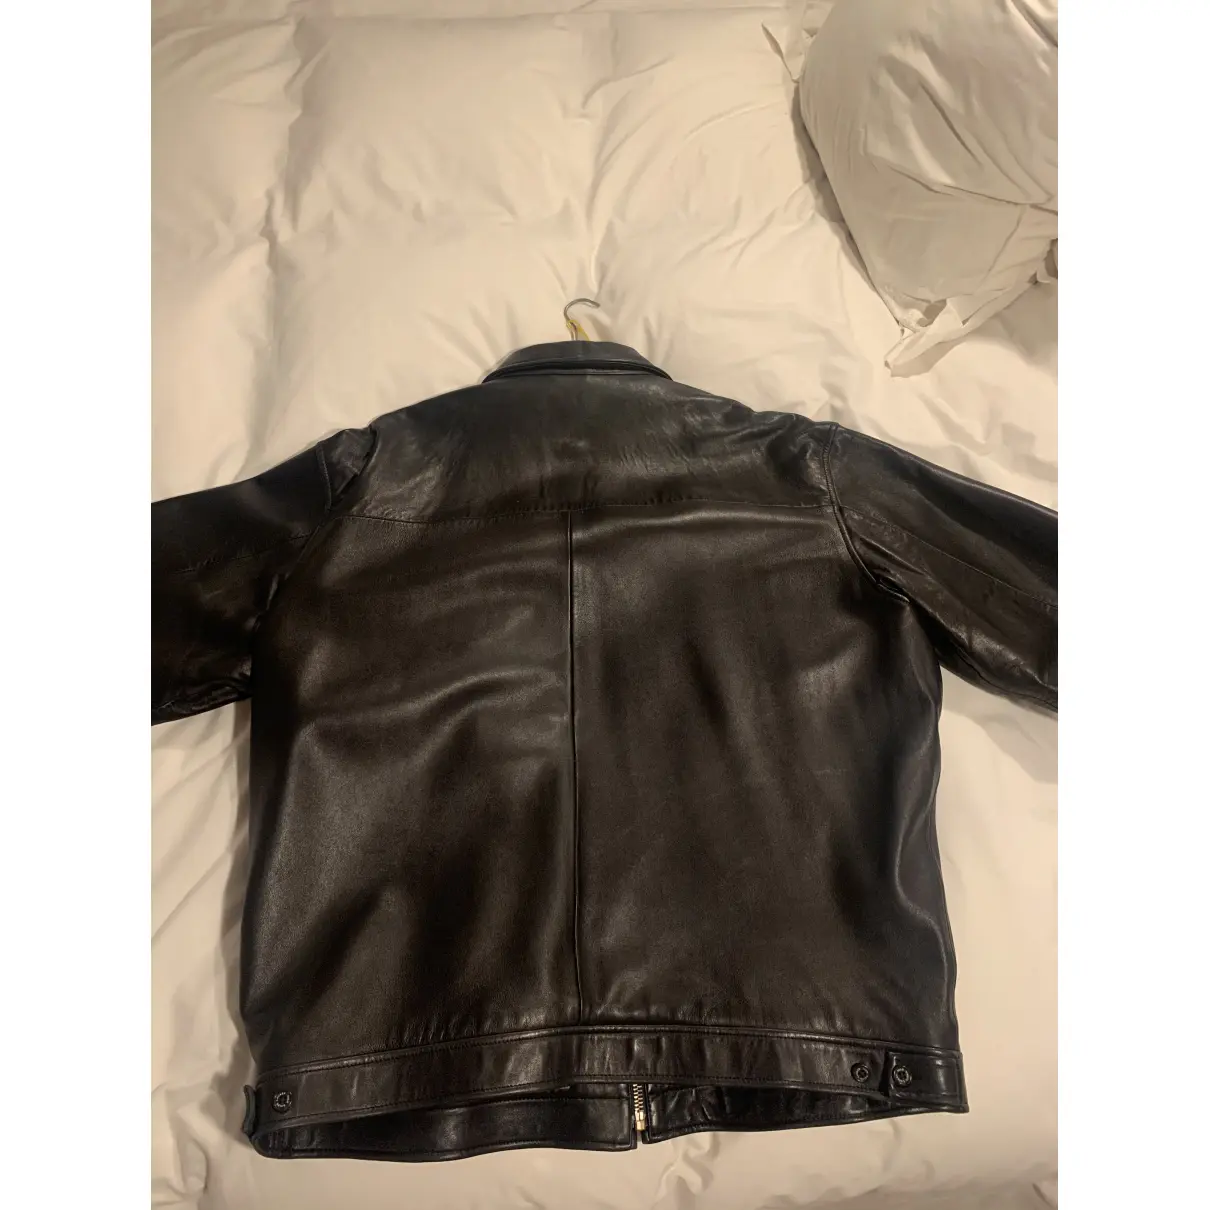 Buy Polo Ralph Lauren Leather jacket online - Vintage